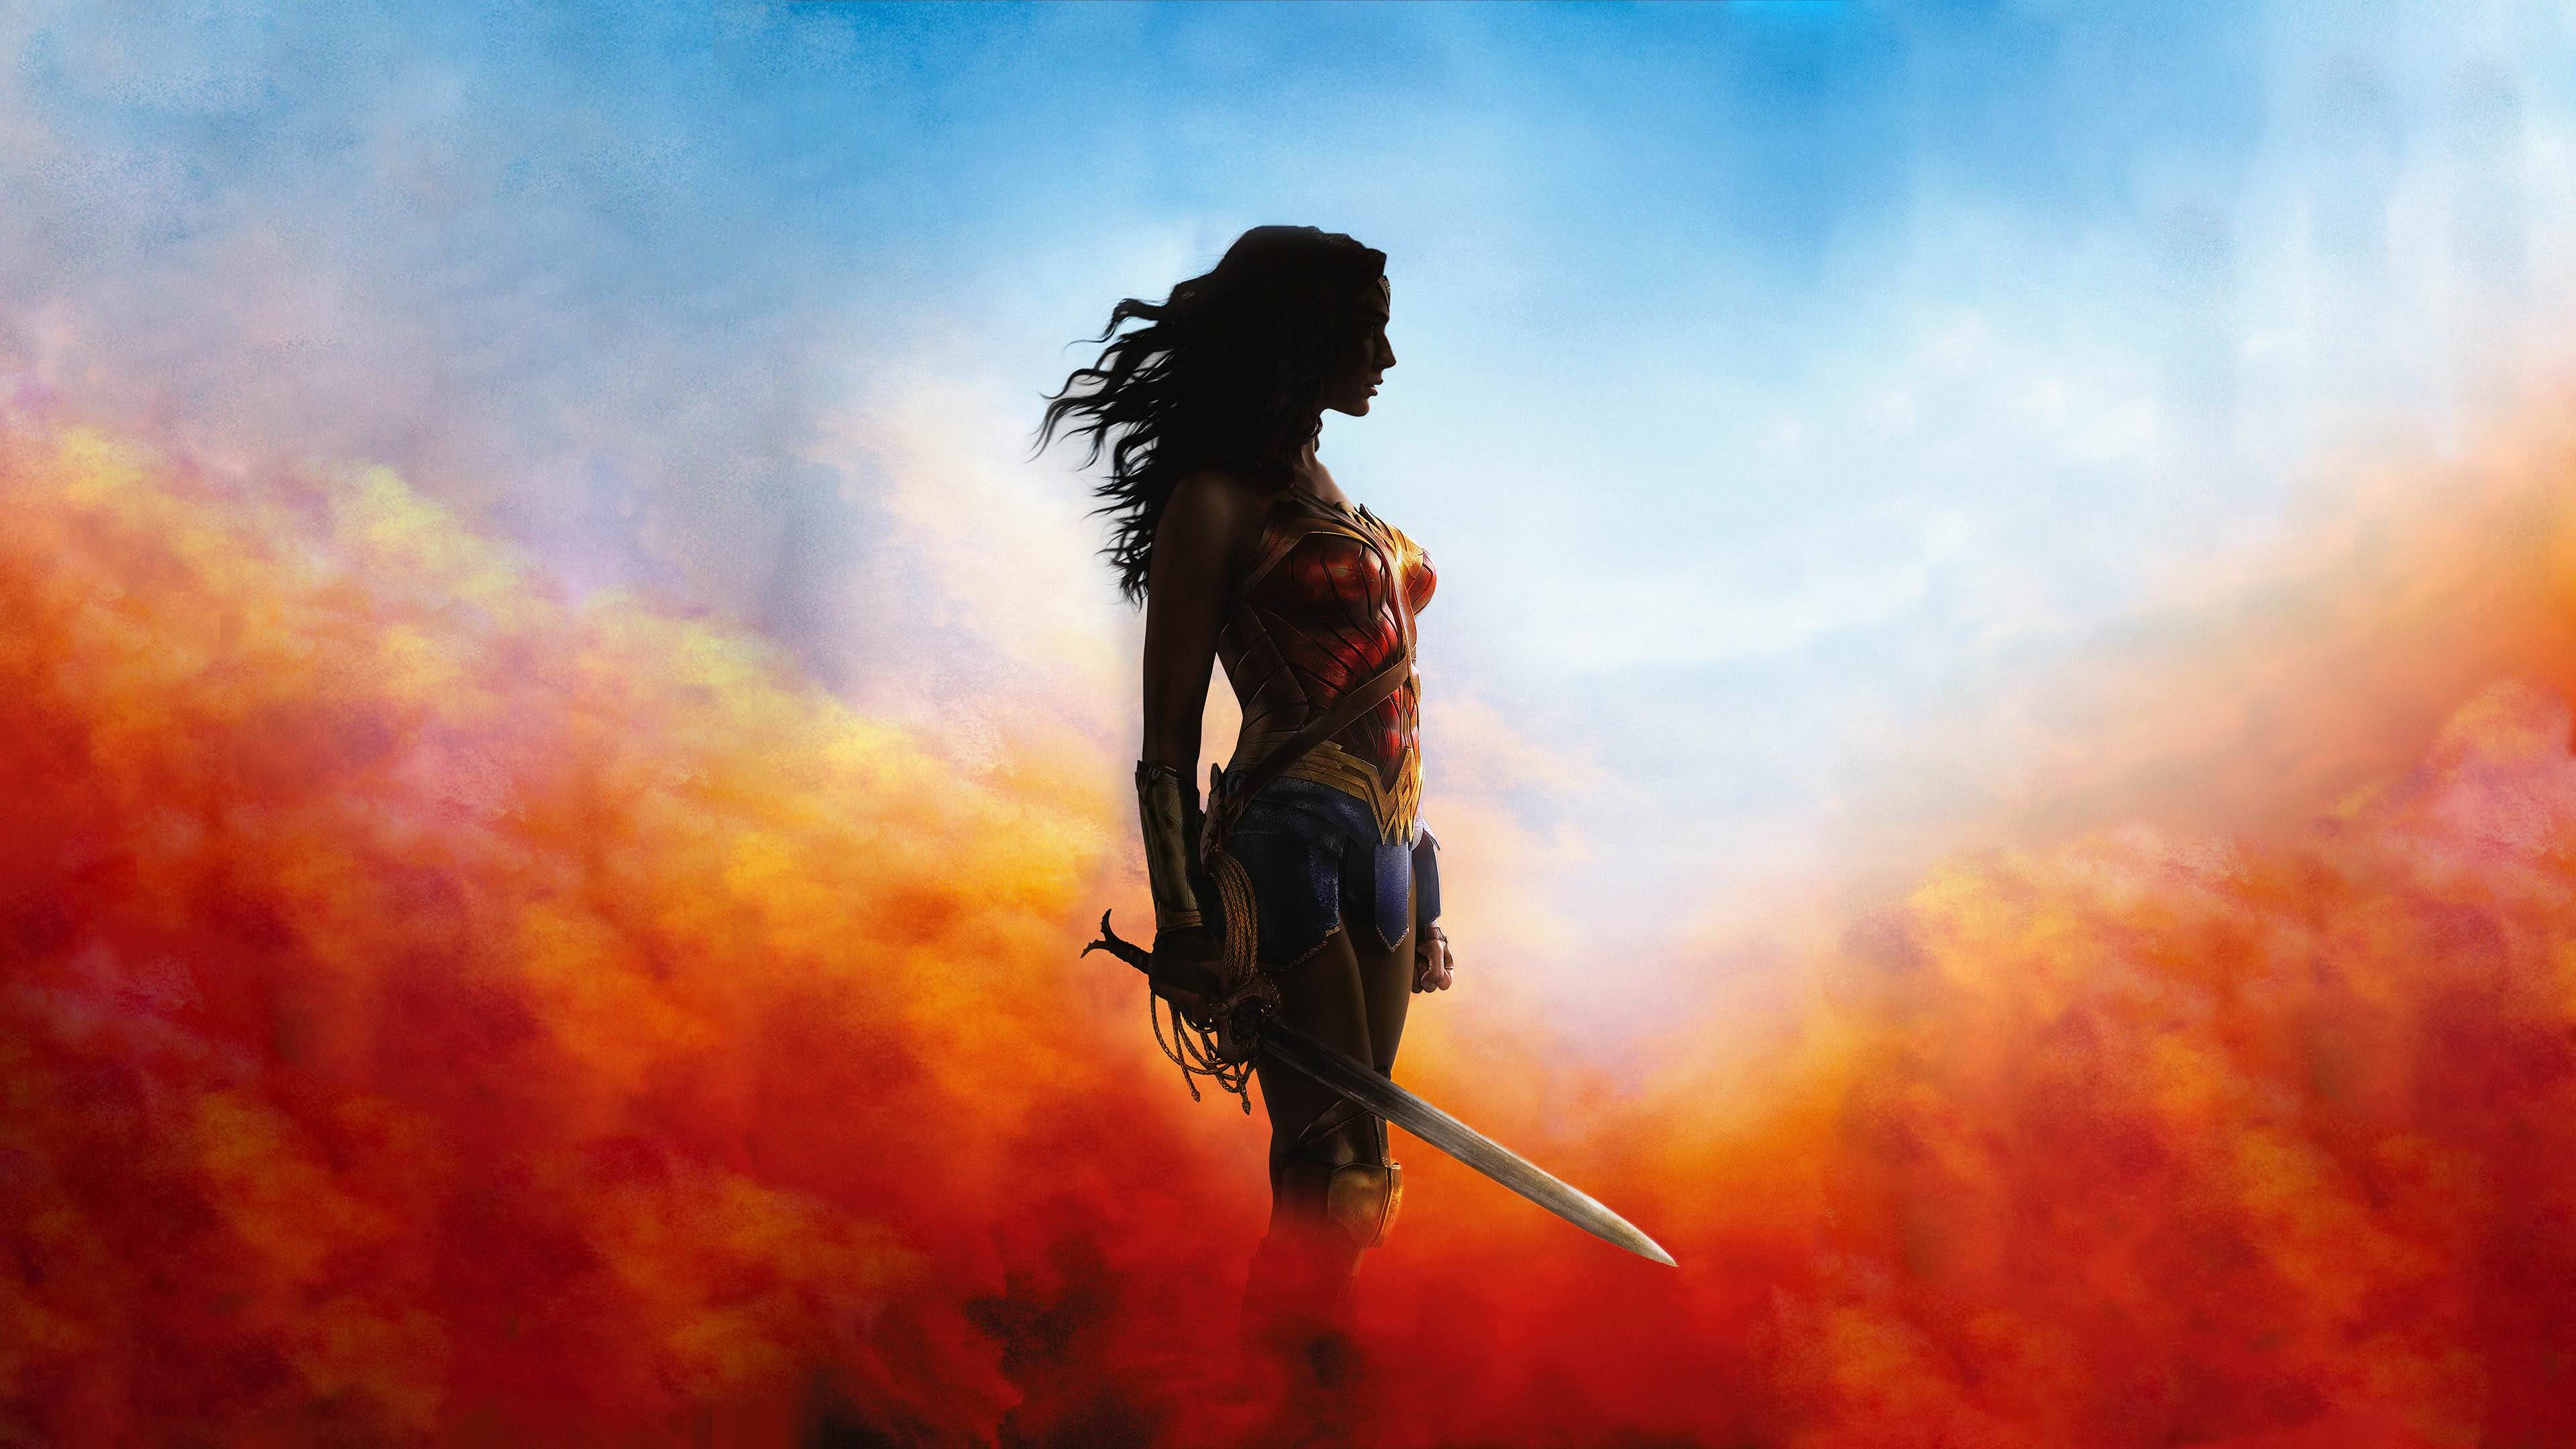 Film Art, Wonder Woman movie, UHD 4K wallpaper, 3840x2160 4K Desktop